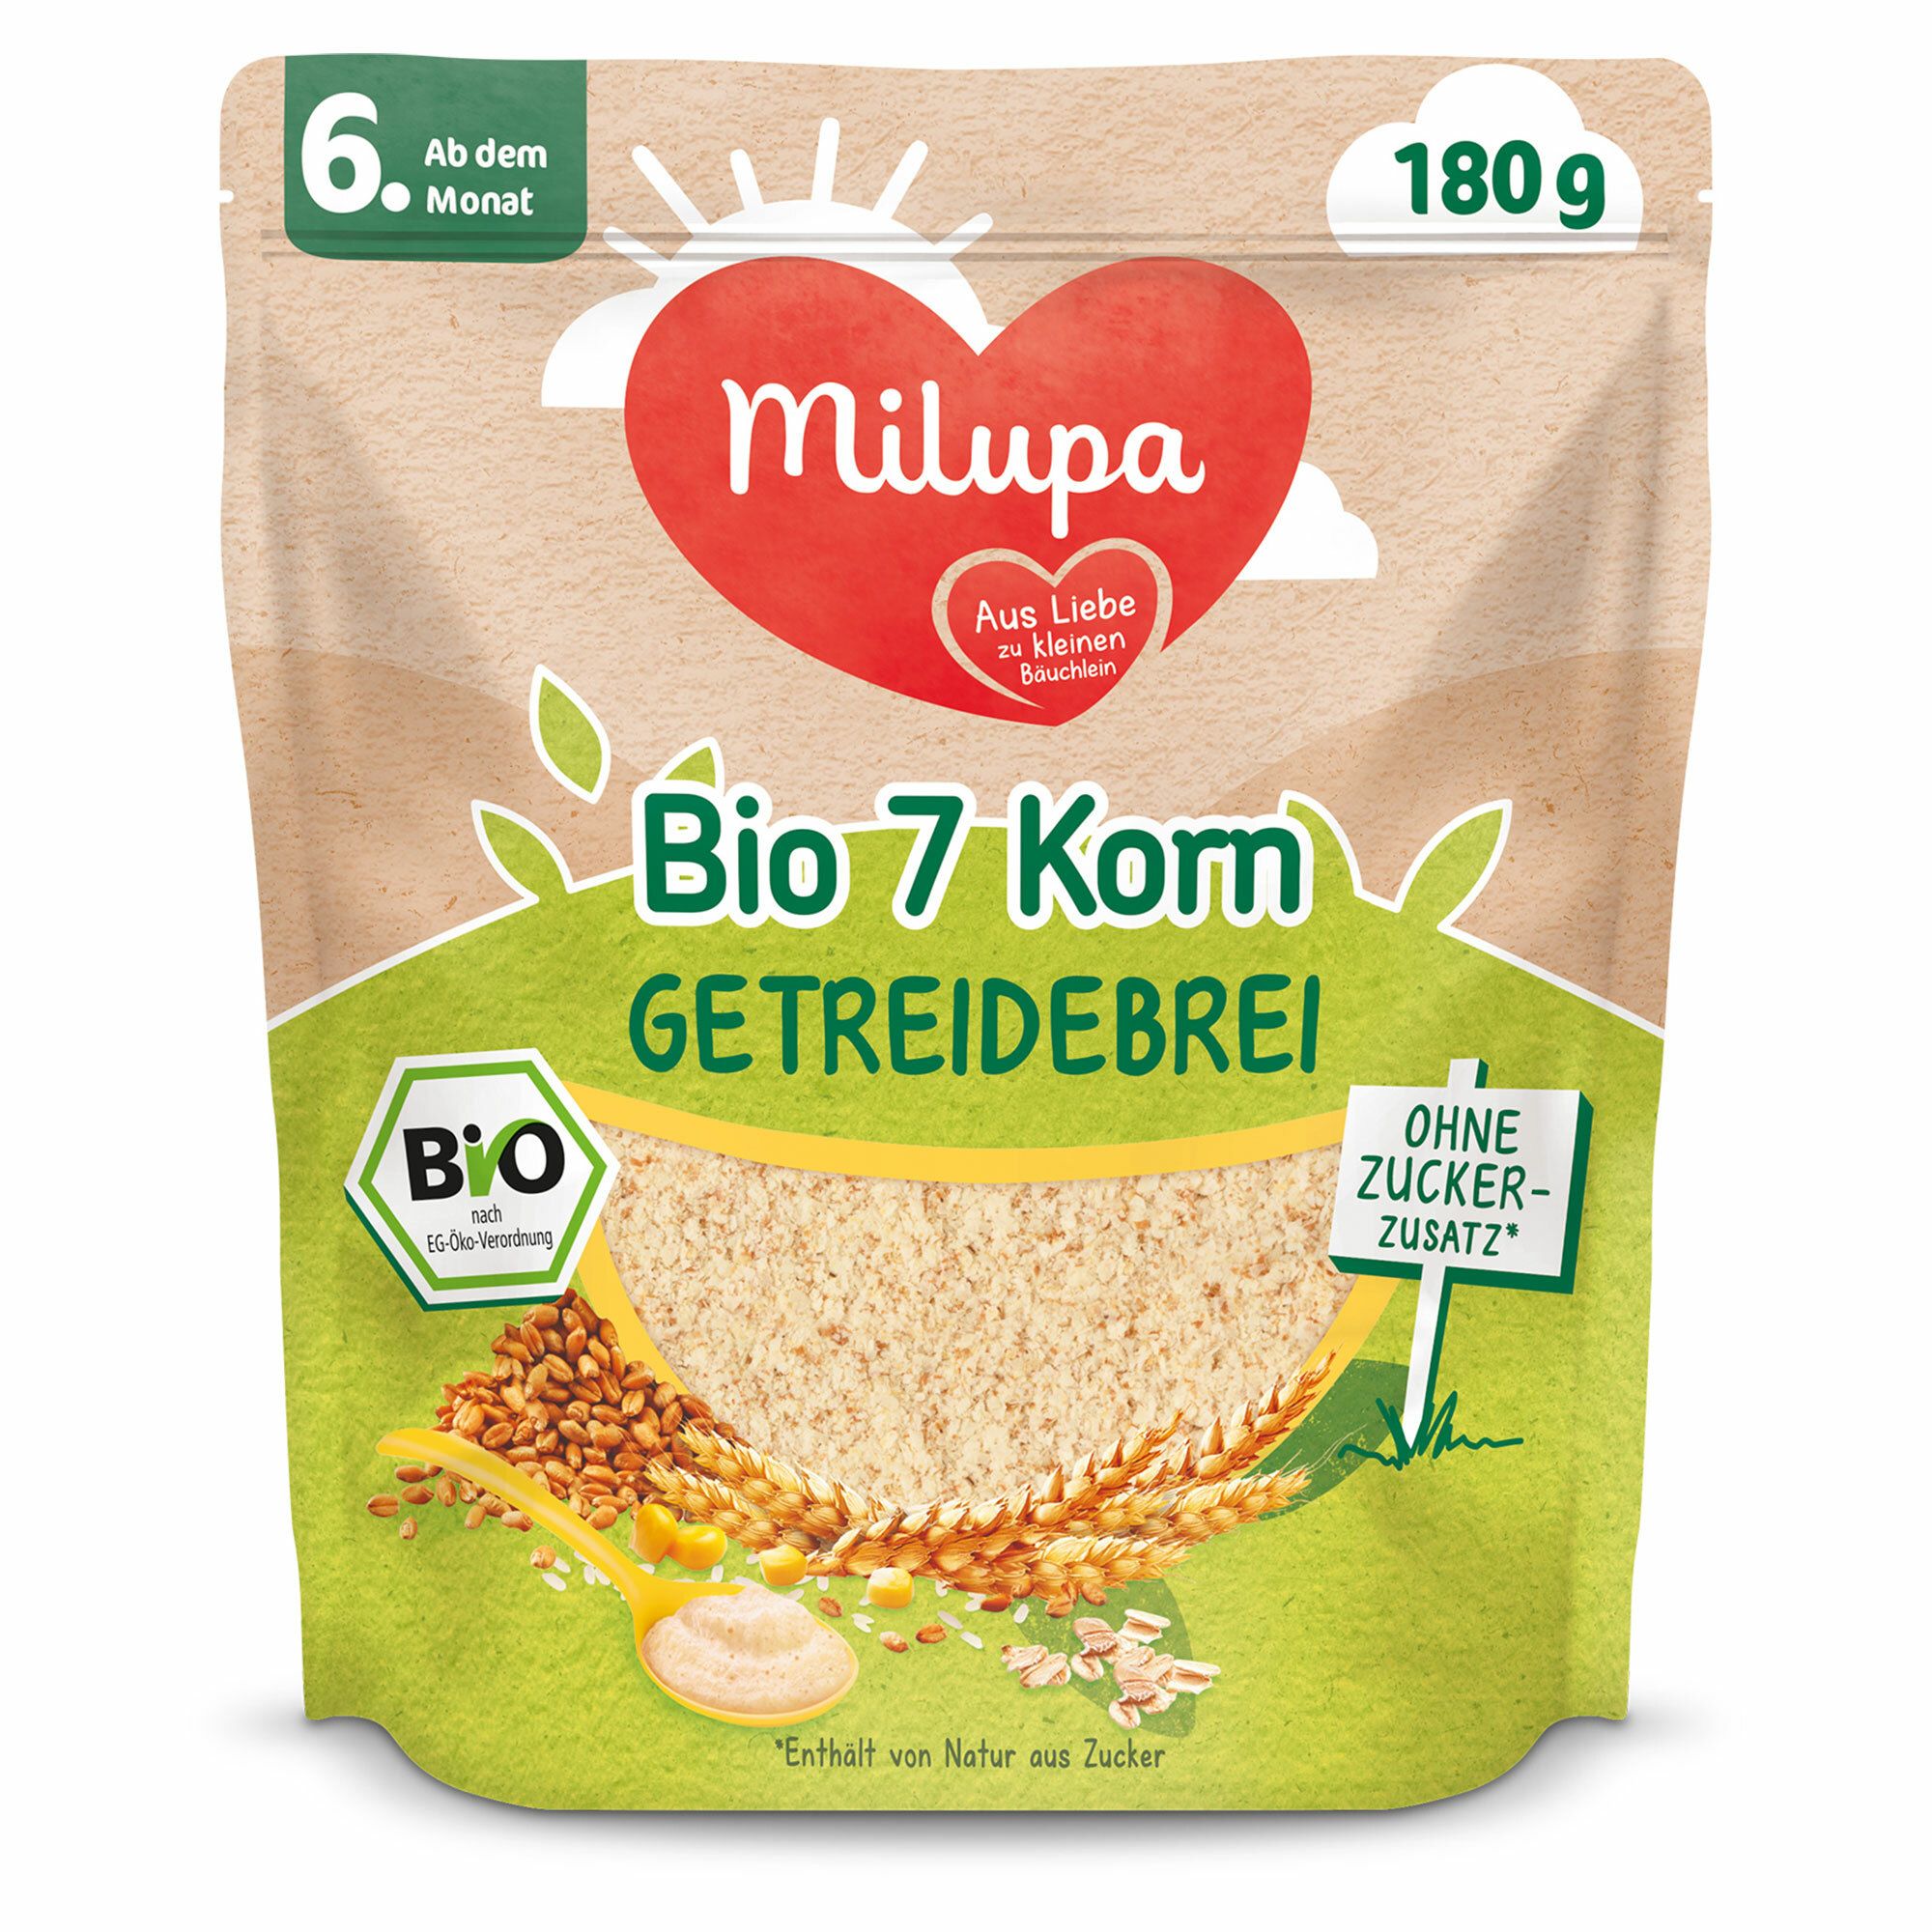 Milupa Bio Getreidebrei 7 Korn ab dem 6 Monat